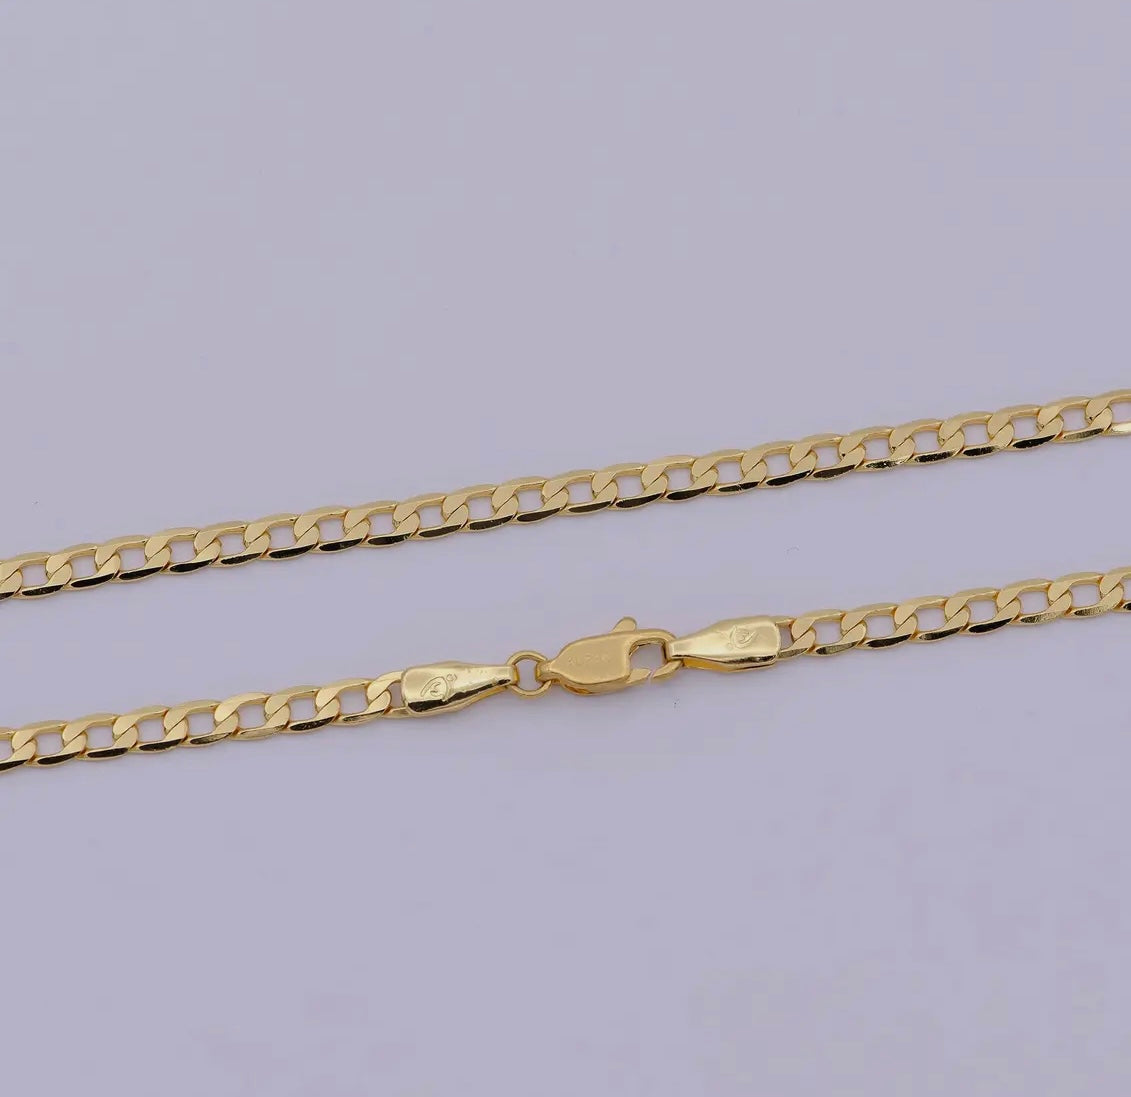 Cuban Link Chain Necklace